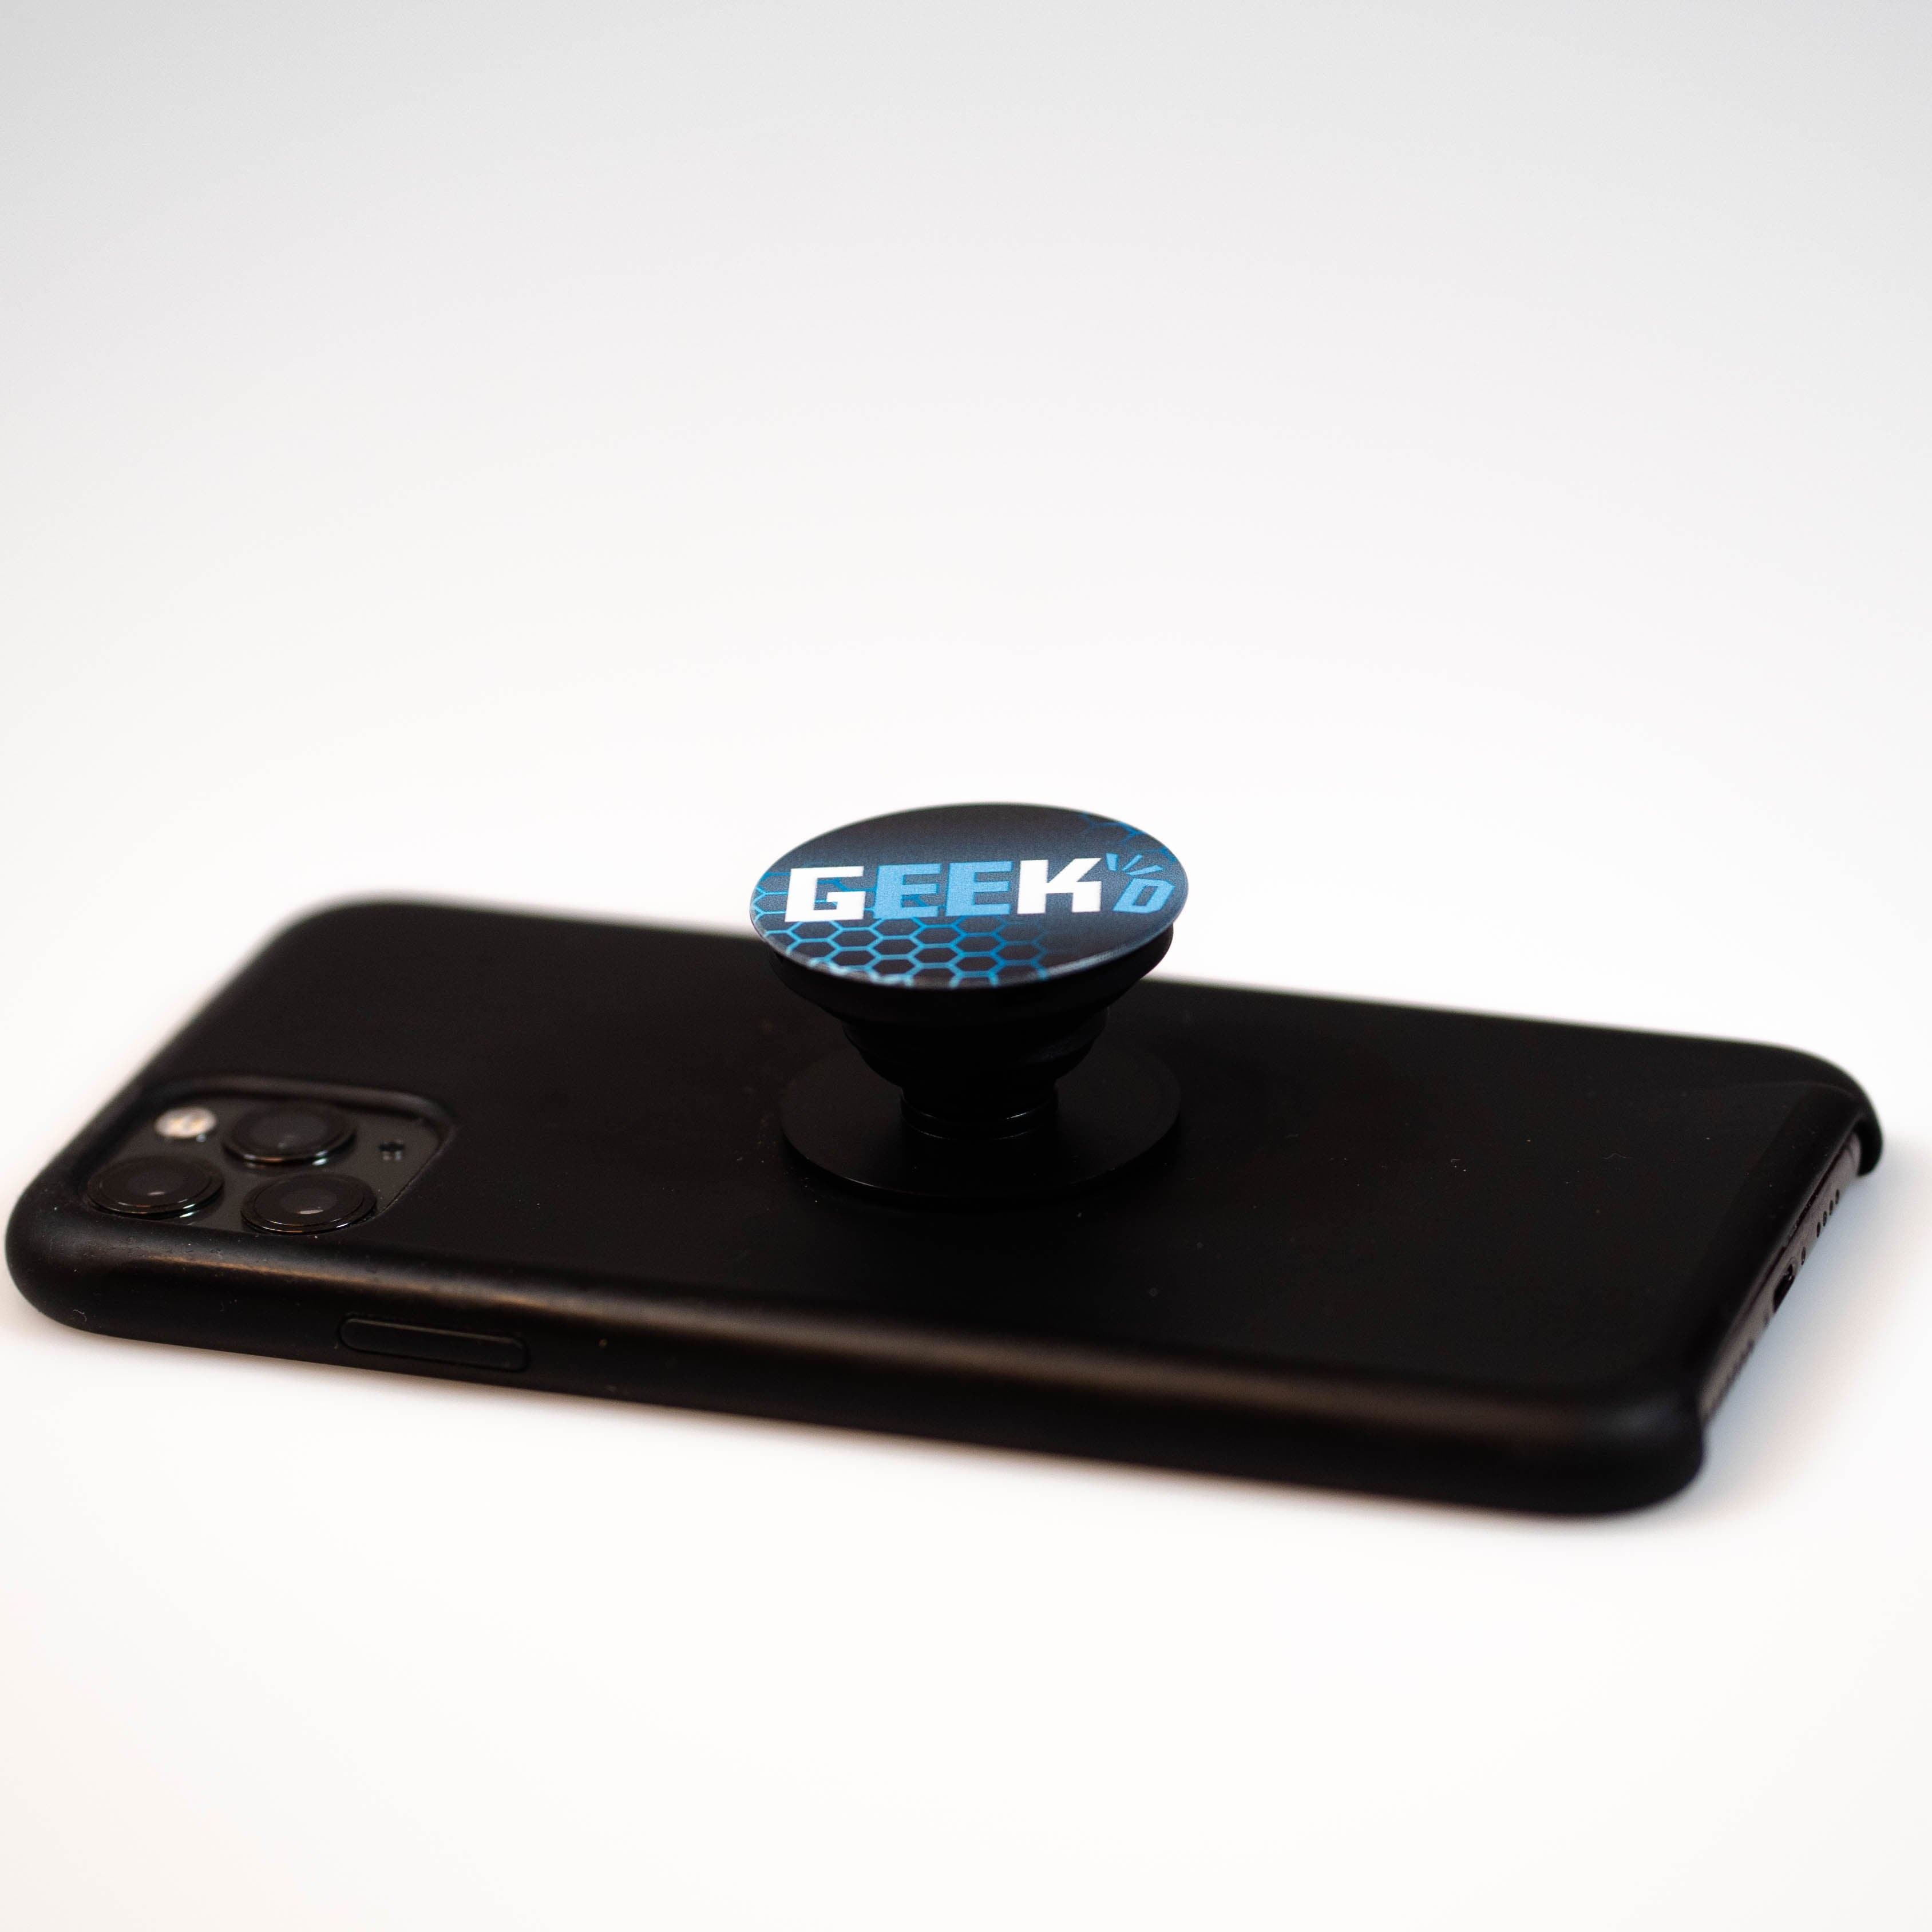 Geekd PhoneSocket